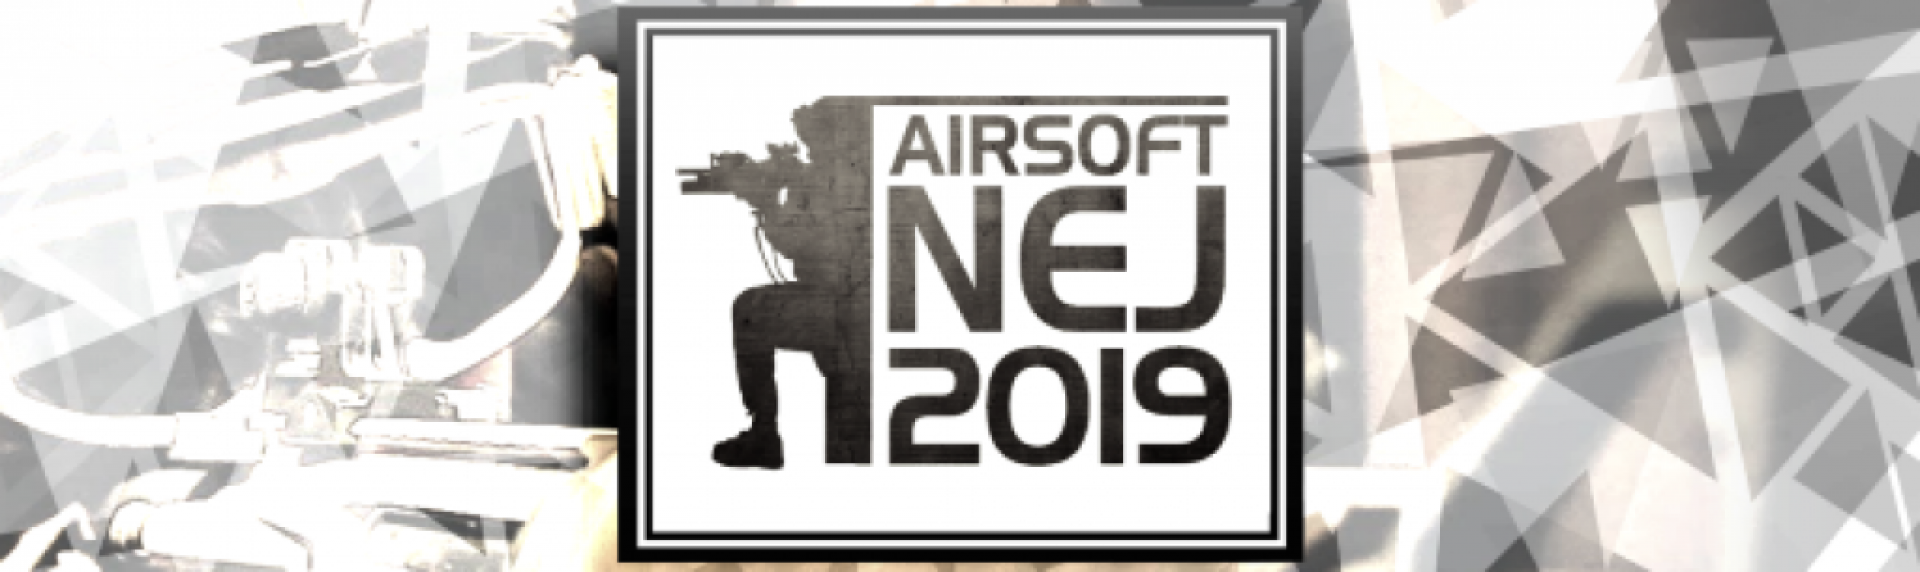 Anketa Airsoft NEJ 2019